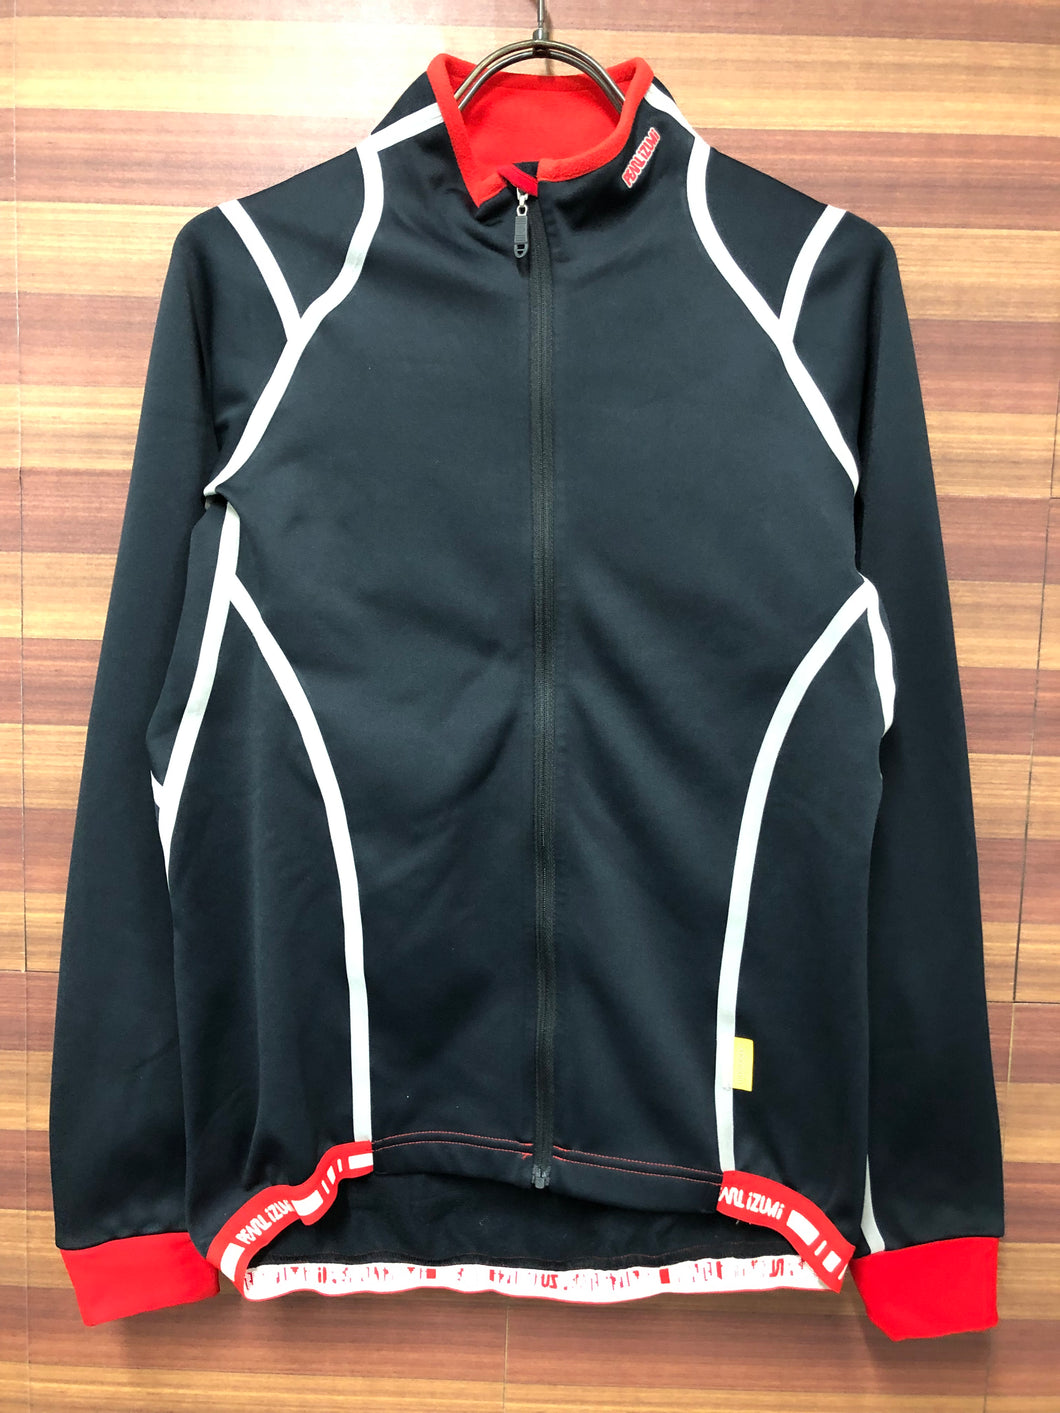 GS433 パールイズミ PEARL iZUMi 長袖 サイクルジャケット 黒 赤 S 裏起毛